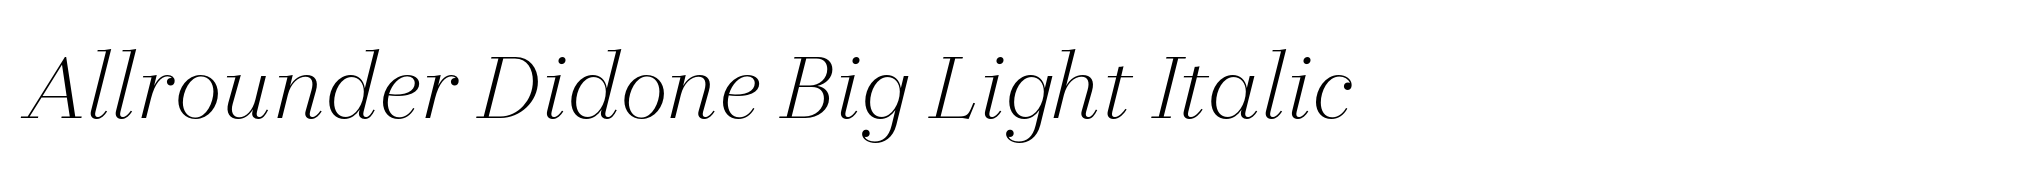 Allrounder Didone Big Light Italic image